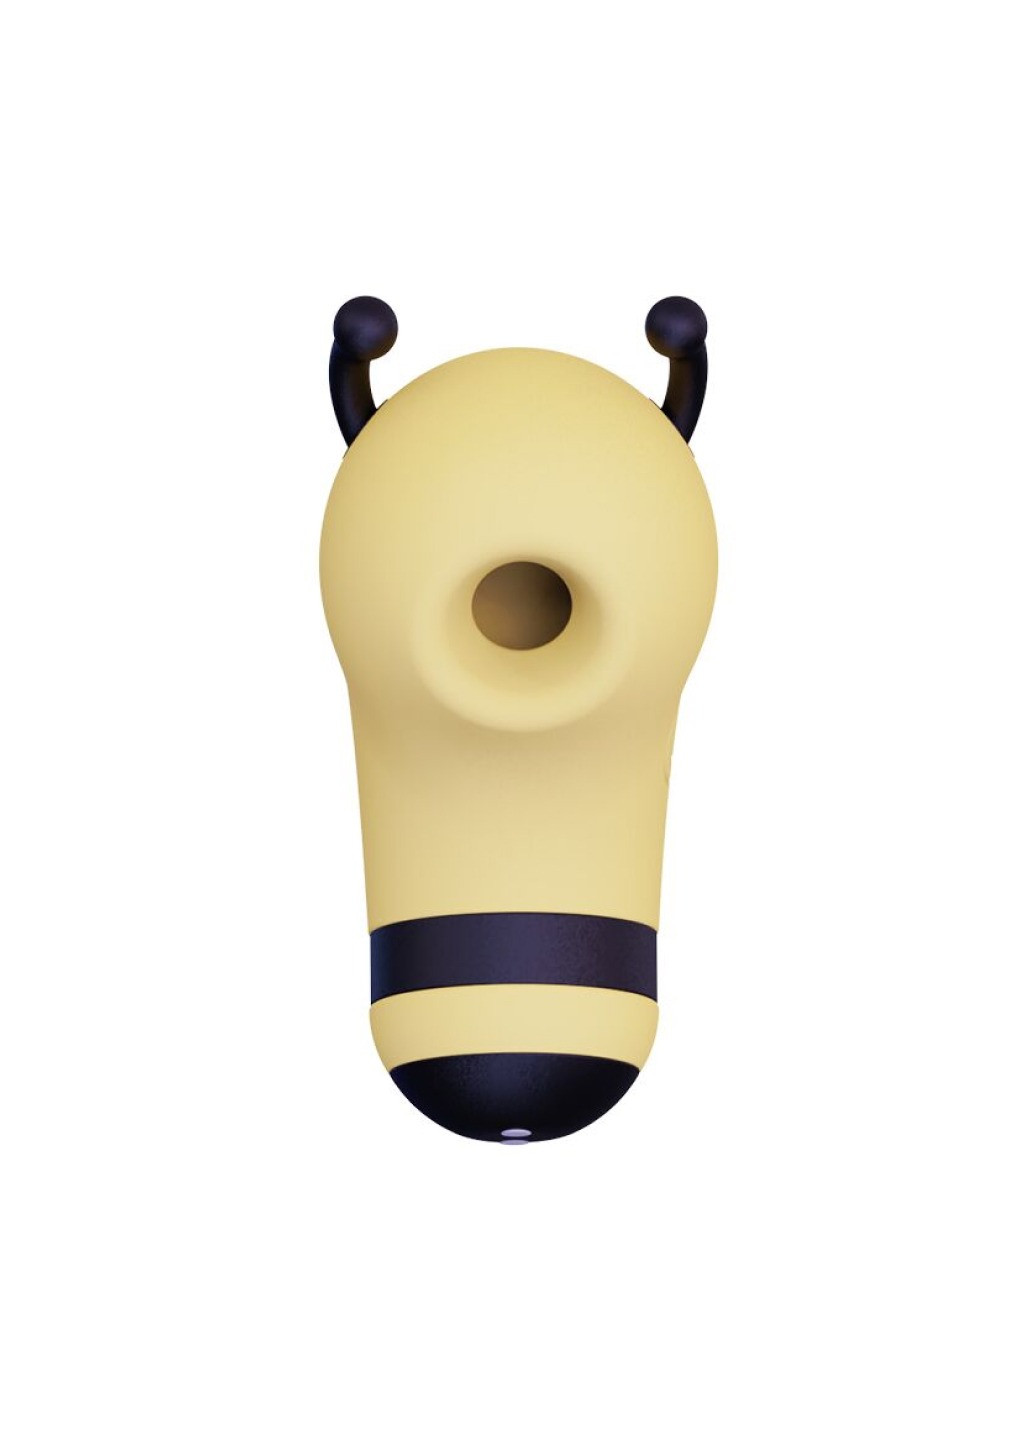 Вакуумний стимулятор із мікрострумами Beebe Yellow, на палець CuteVibe (272615963)